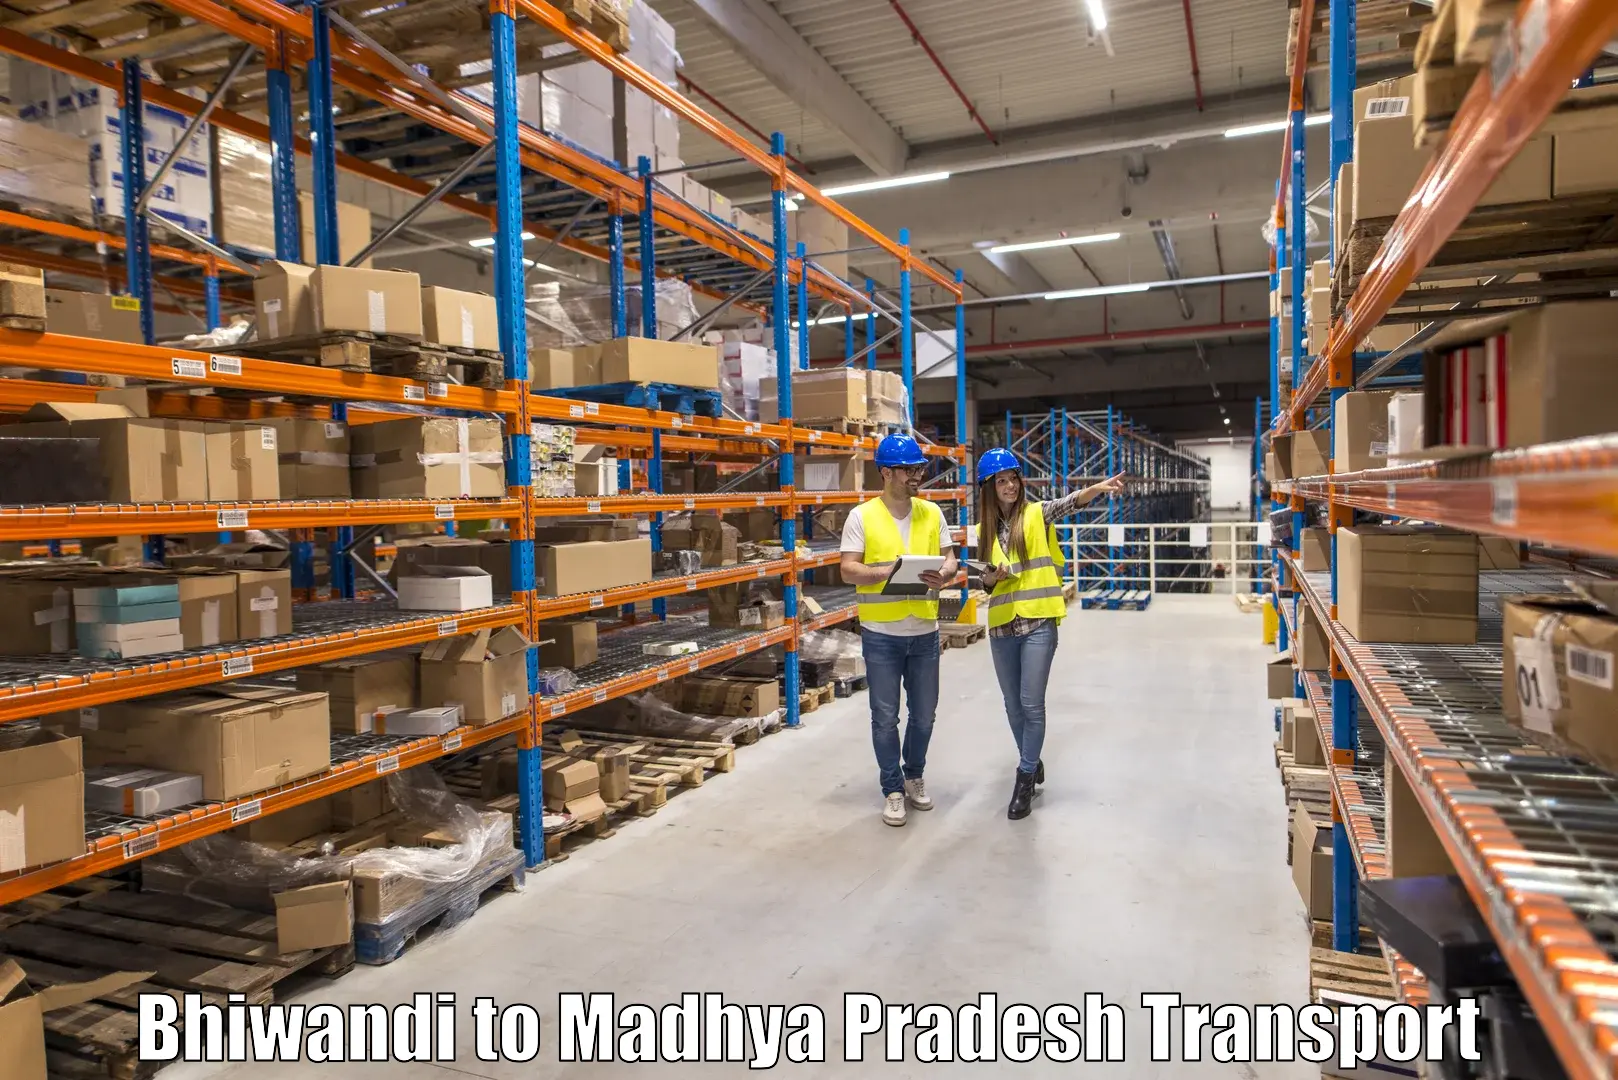 Truck transport companies in India Bhiwandi to Datia